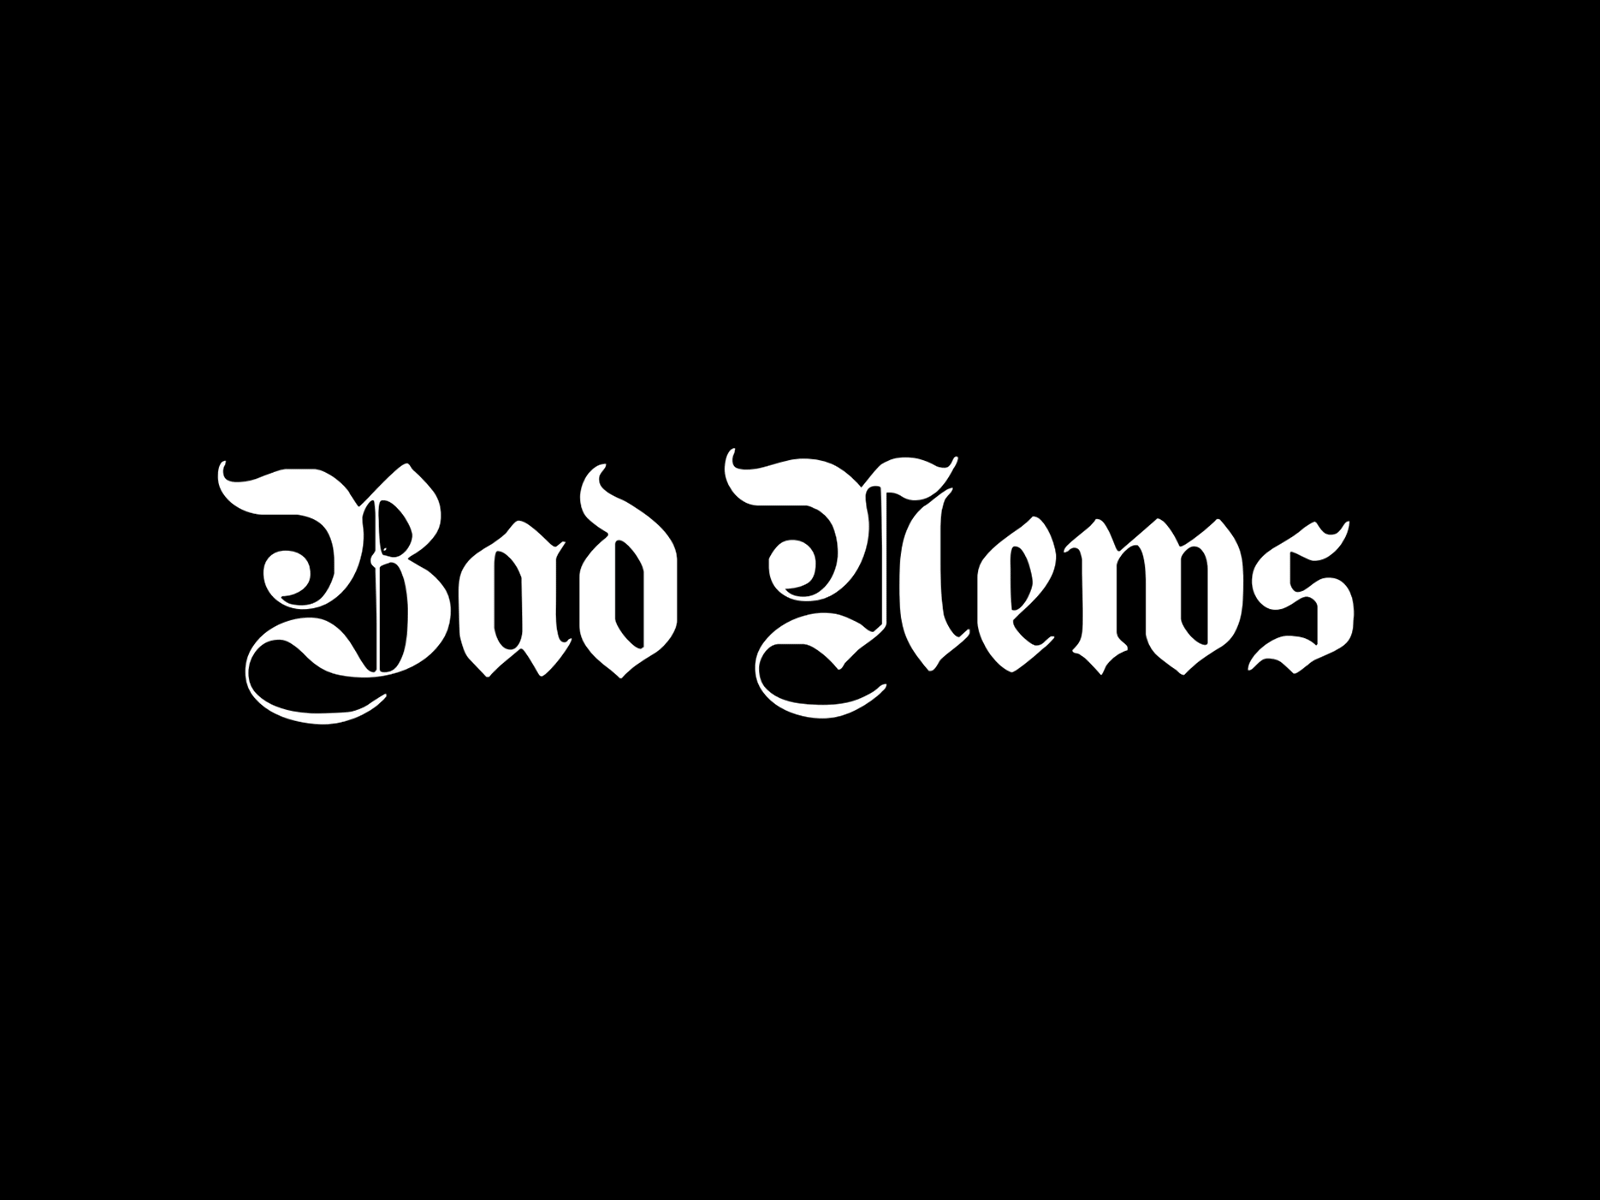 Music Video / Bad News by Anna Akana